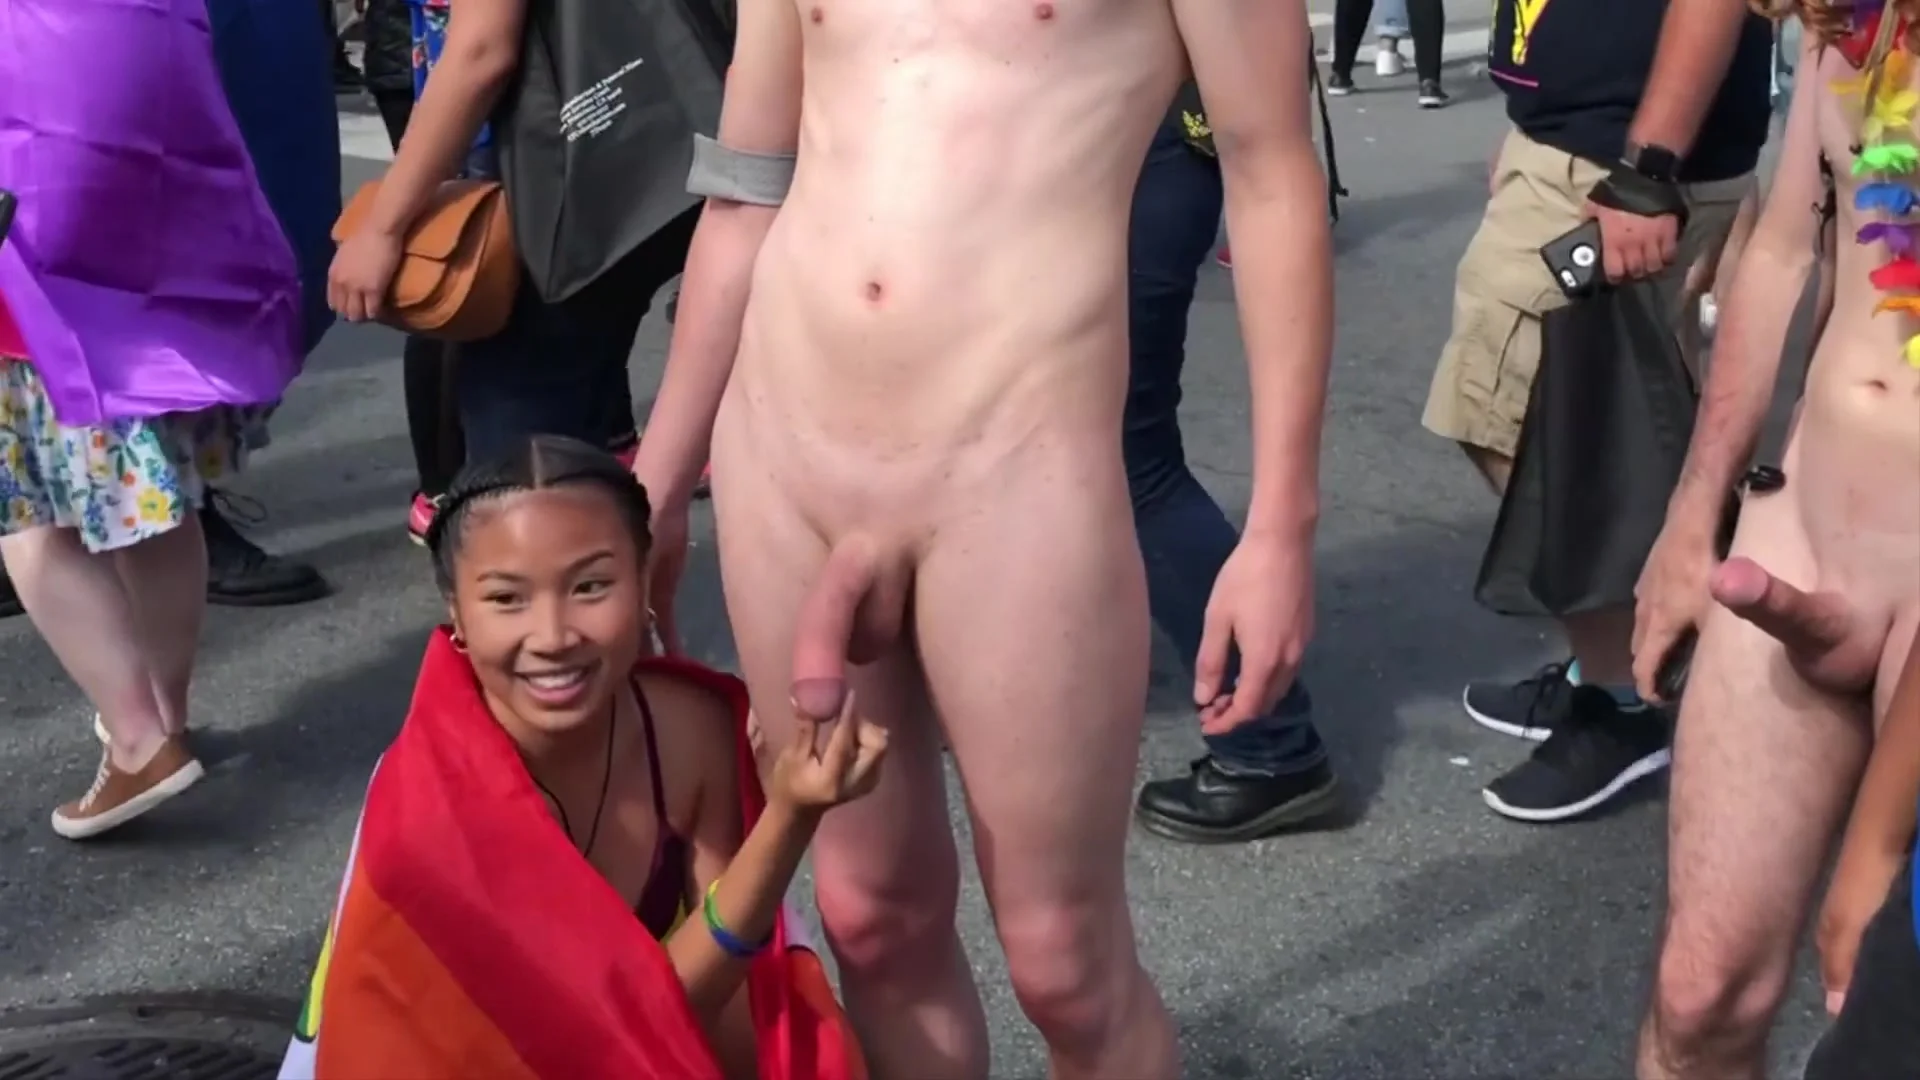 public places men in Nude